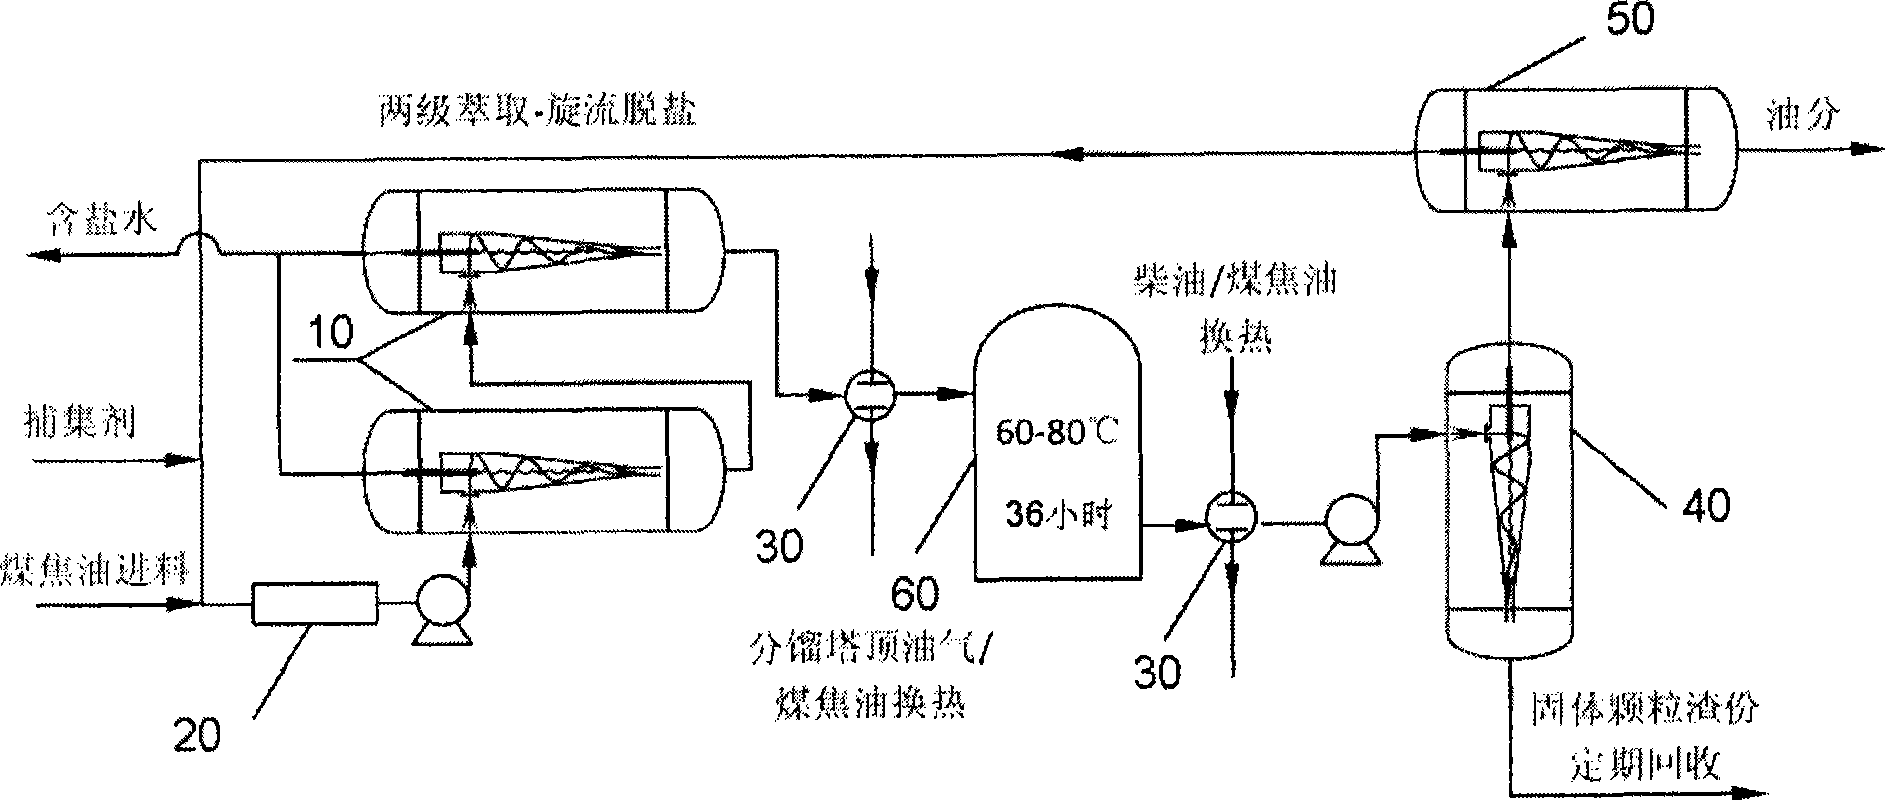 Coal tar coupled rotational flow purification method and apparatus